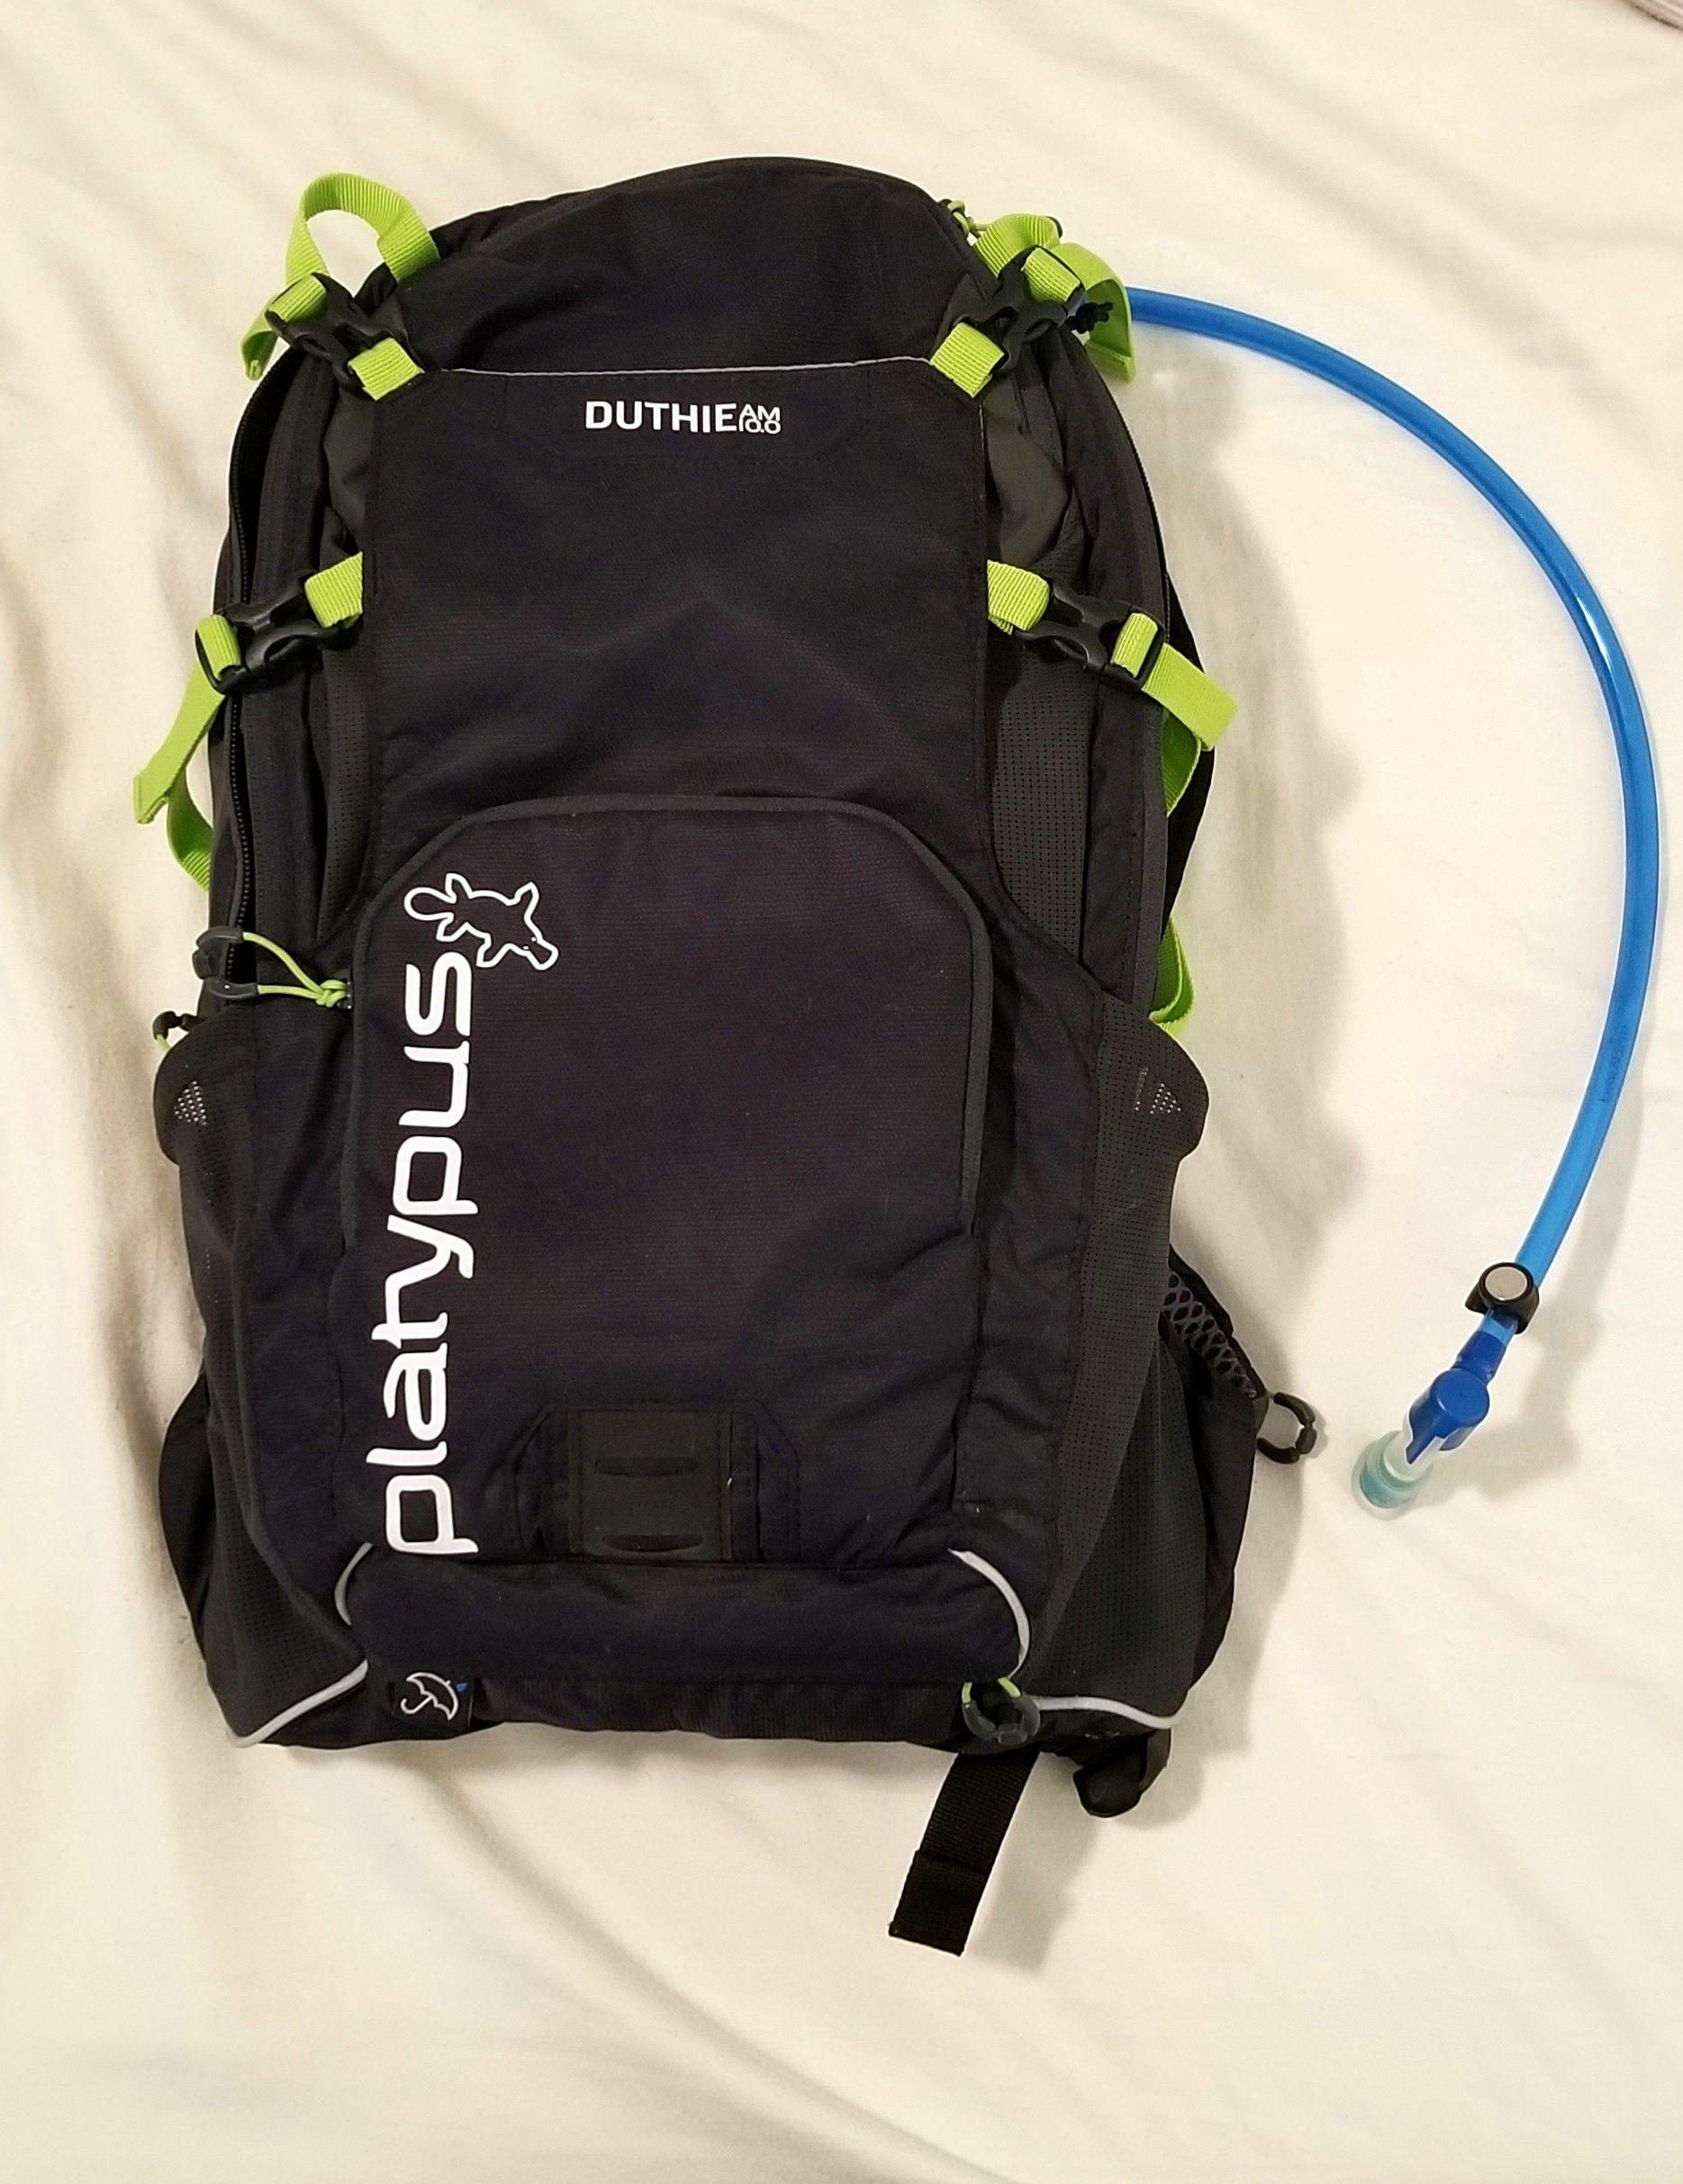 Hiking backpack - Platypus Duthie am 10.0